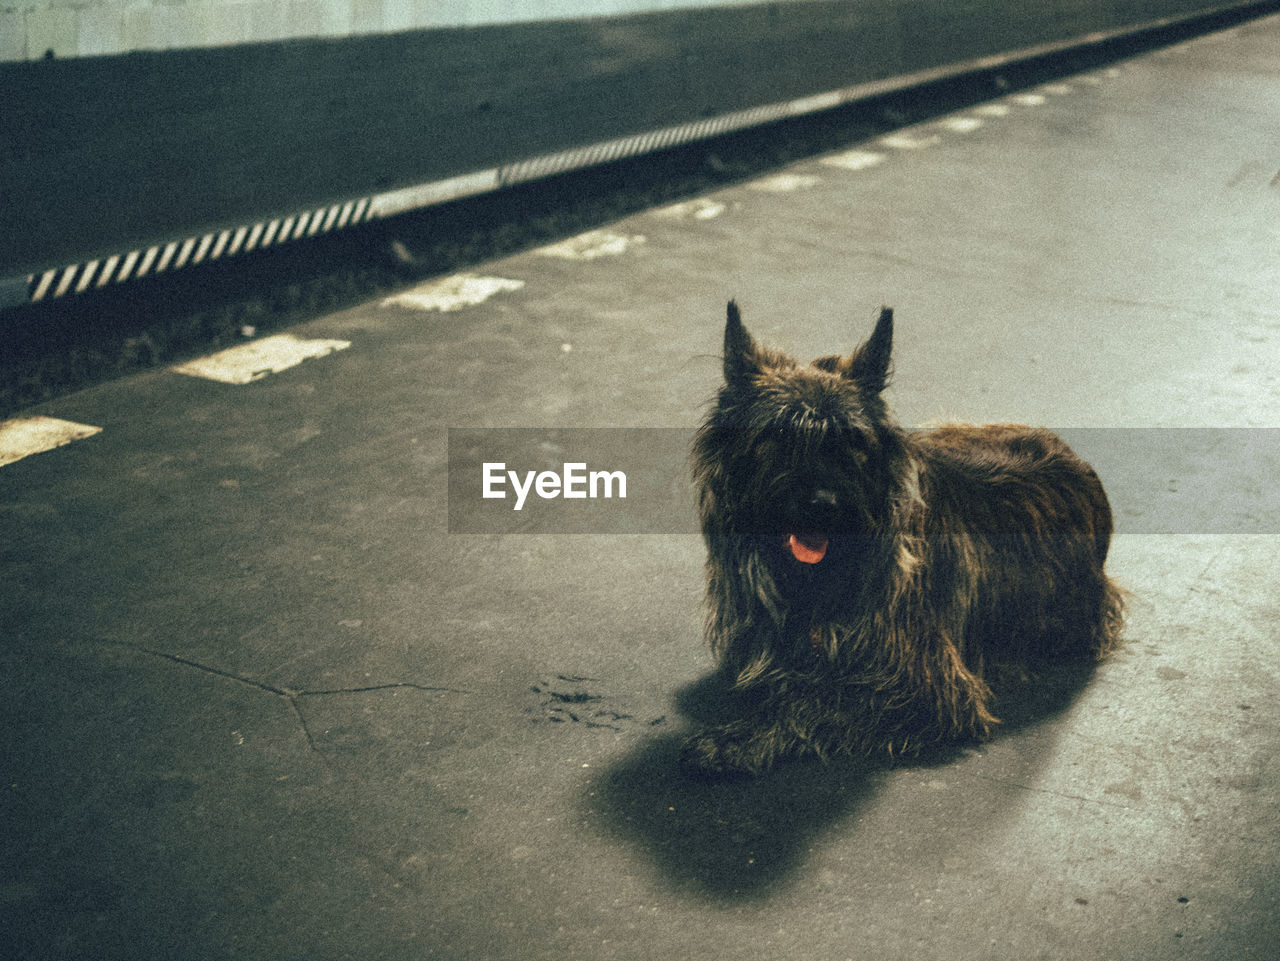 Dog sitting on subway platform in berlin